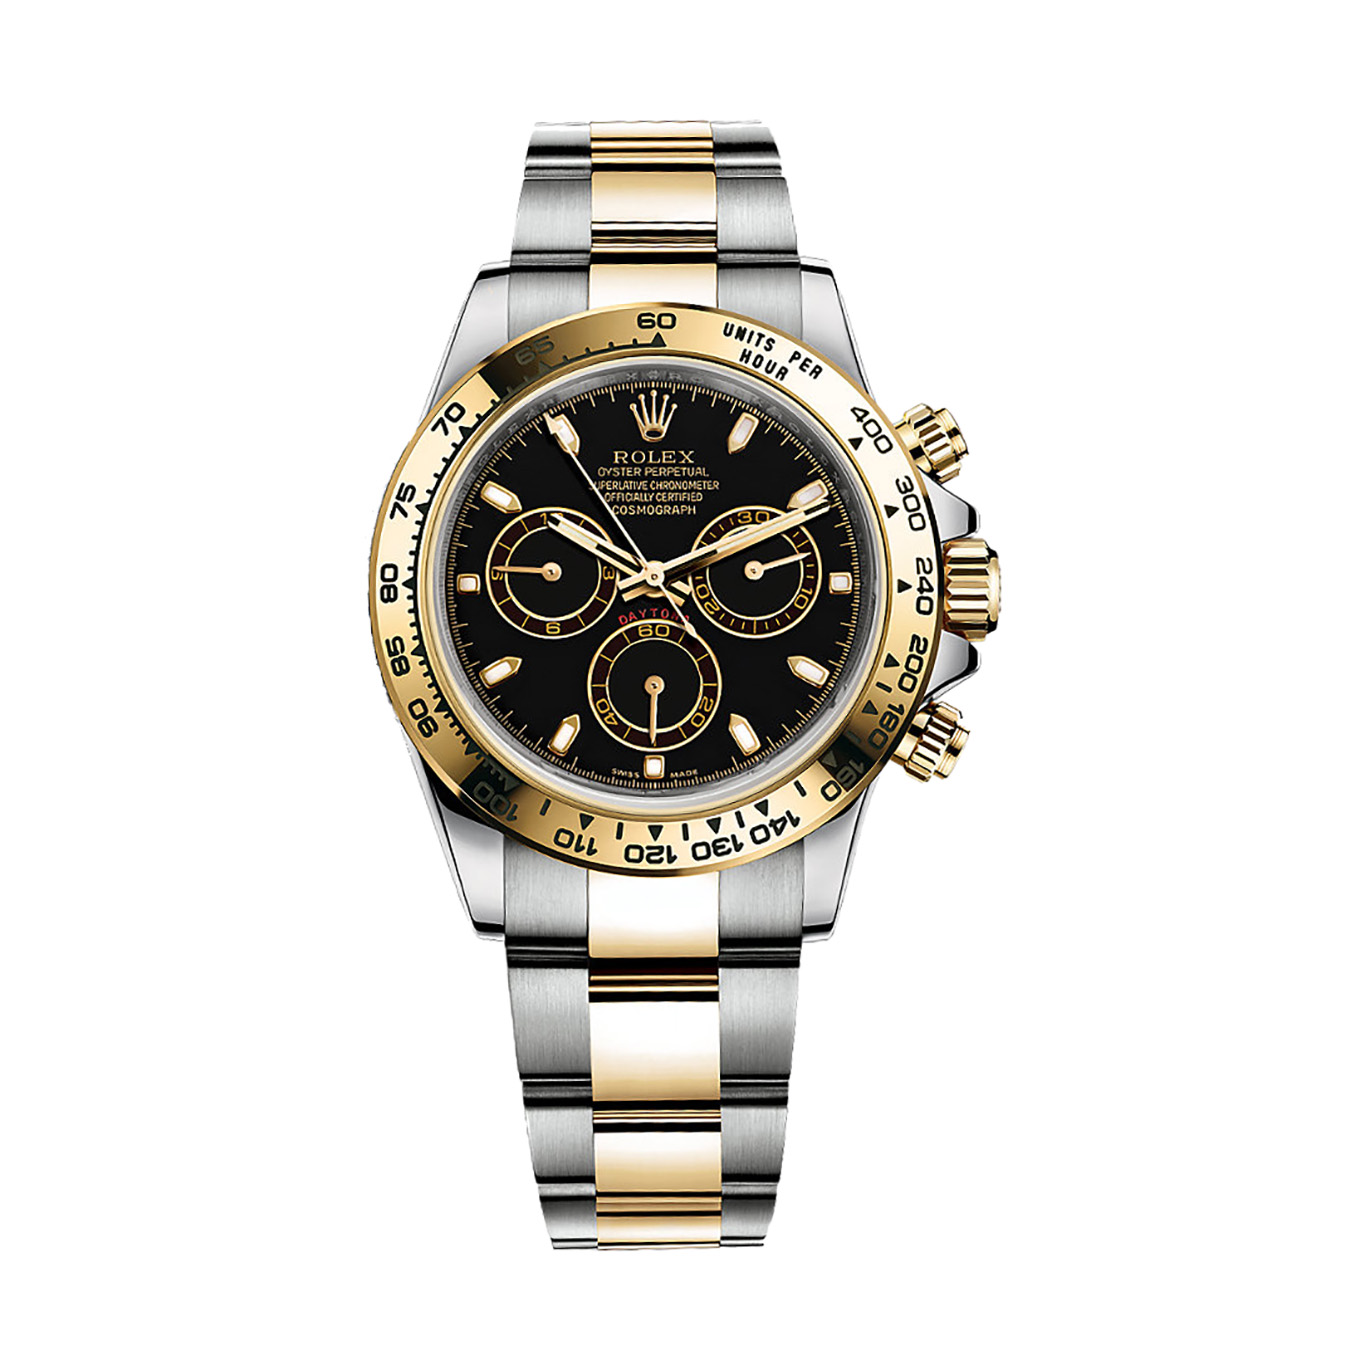 Cosmograph Daytona 116503 Gold & Stainless Steel Watch (Black)